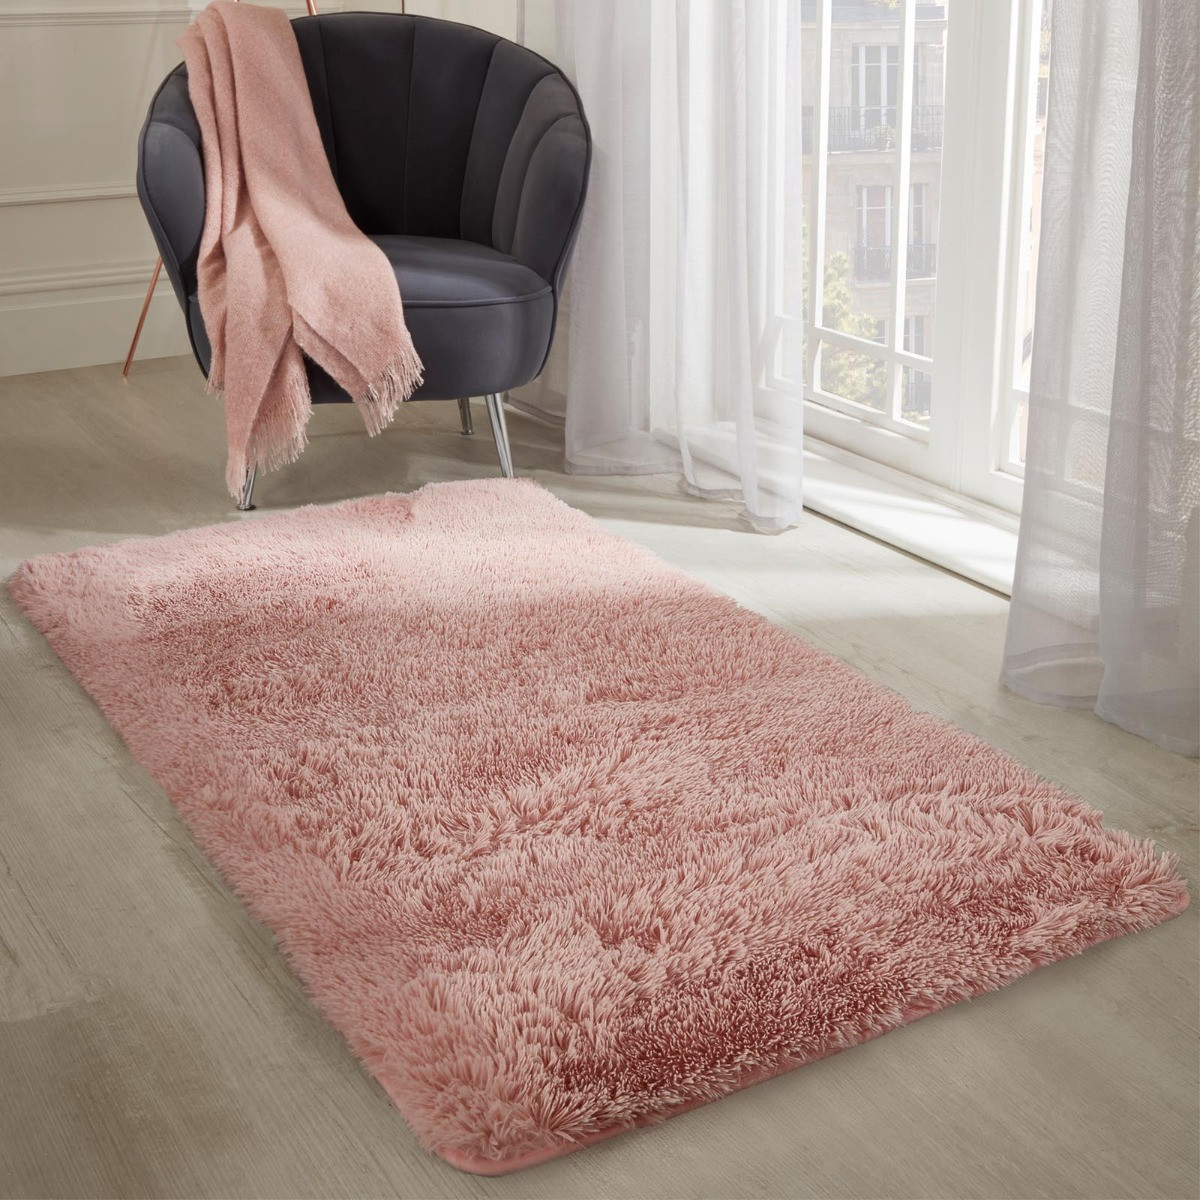 Sienna Soft Fluffy Rug Anti-Slip Plain Shaggy Floor Mat, Blush Pink - 120 x 170cm>